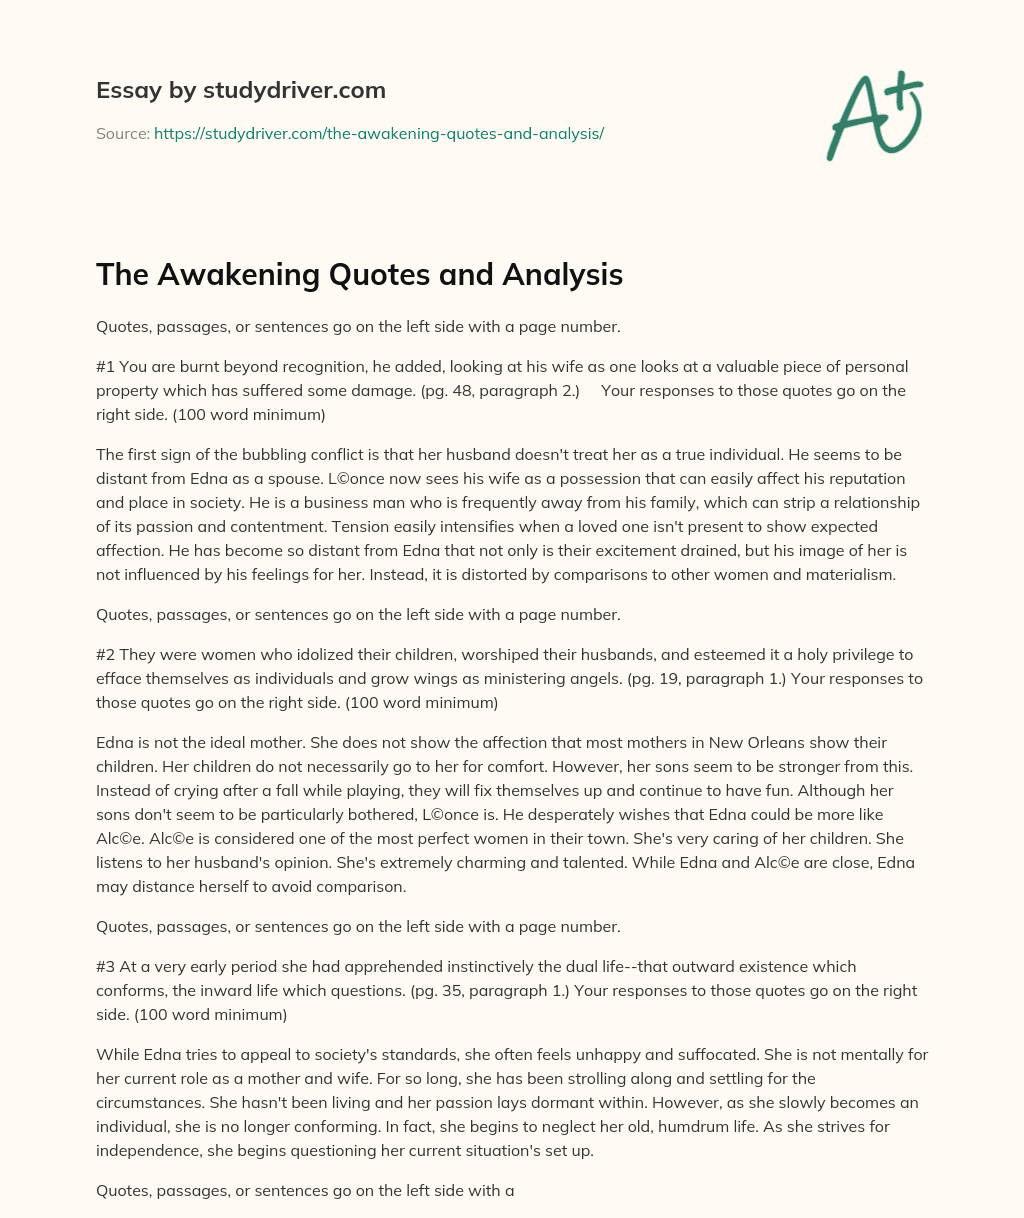 The Awakening Quotes and Analysis essay